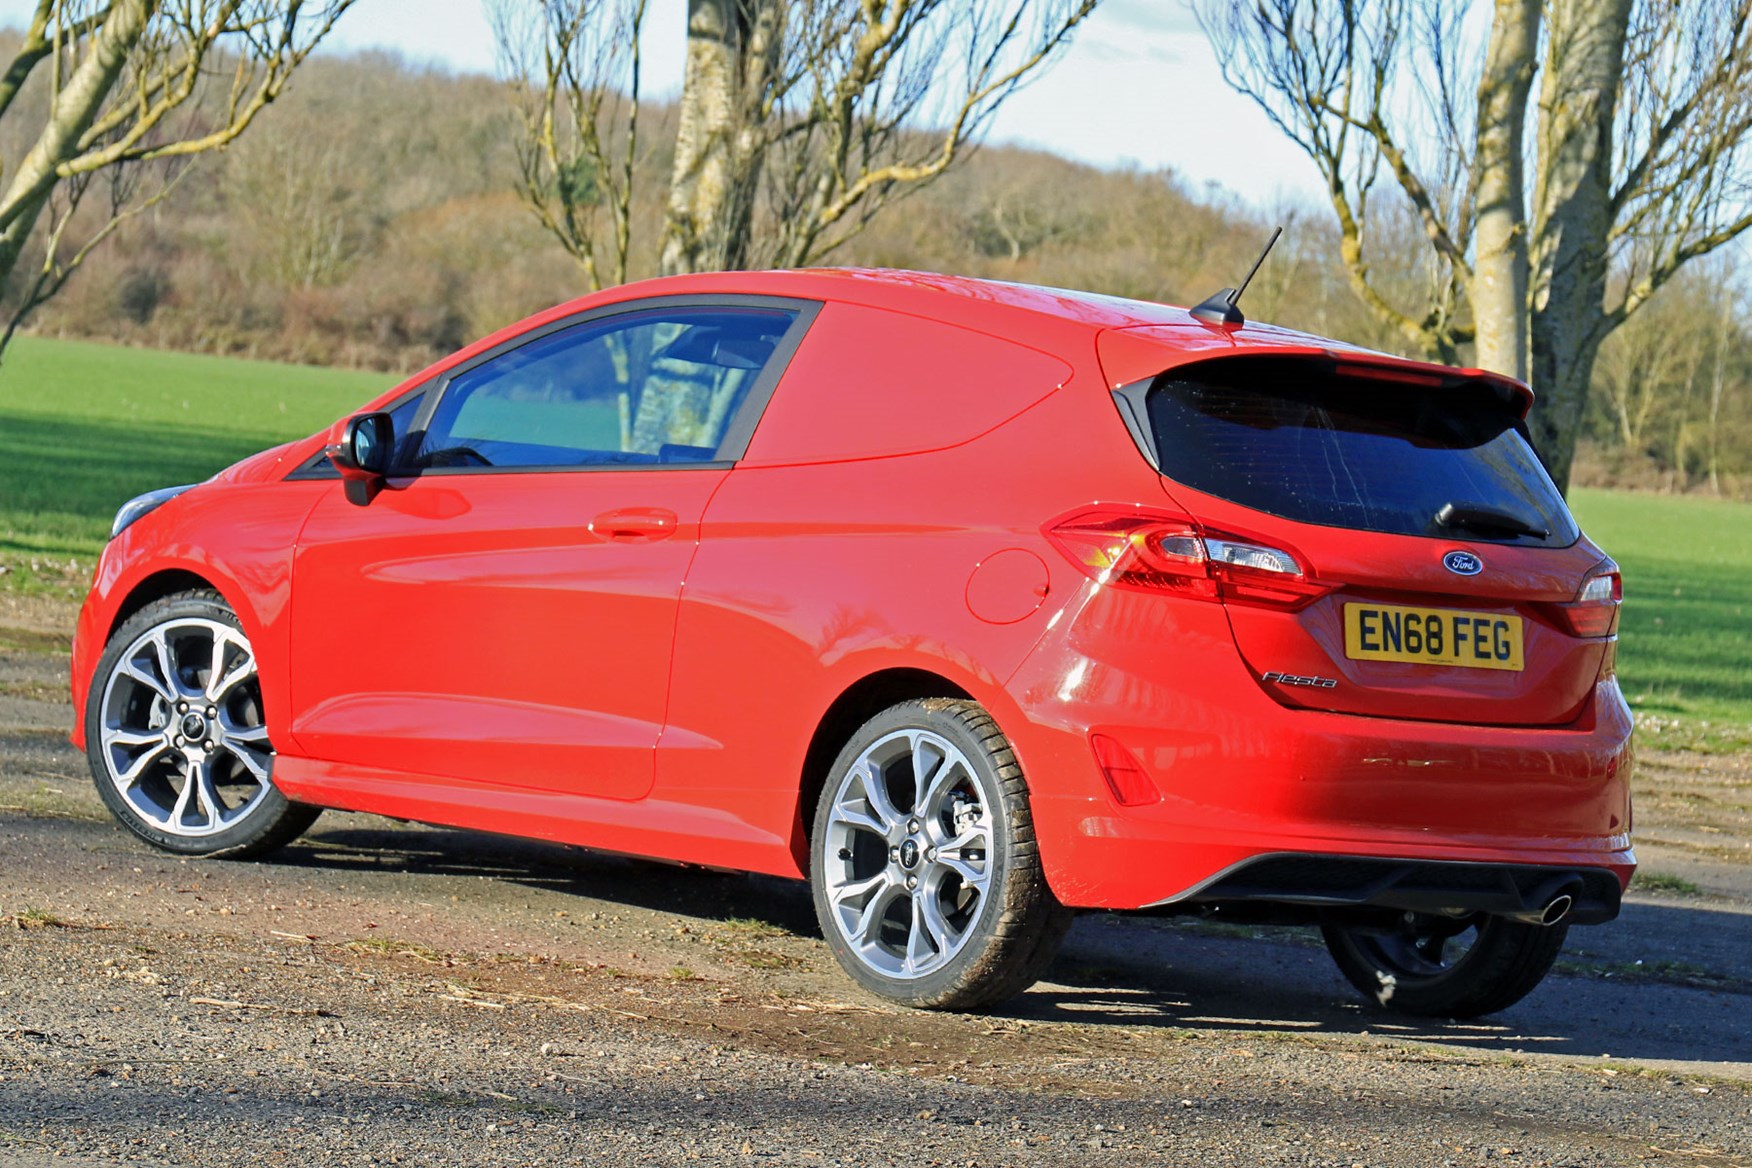 Ford Fiesta Sport Van review - rear view, red